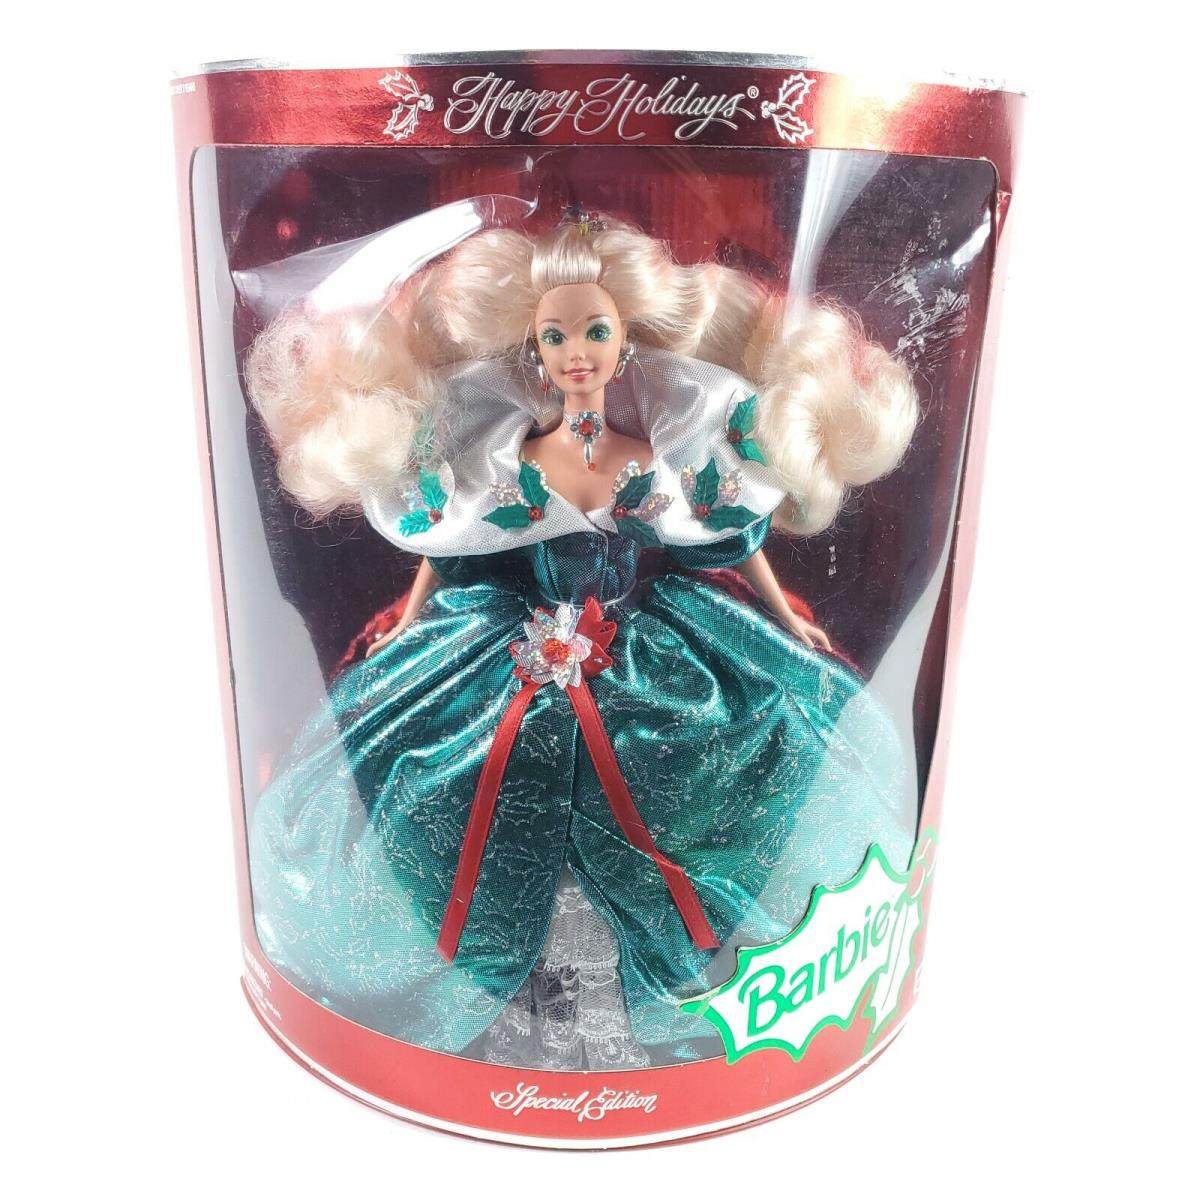 1995 Mattel Barbie Doll Blonde Happy Holidays Special Edition 14123 Nrfb